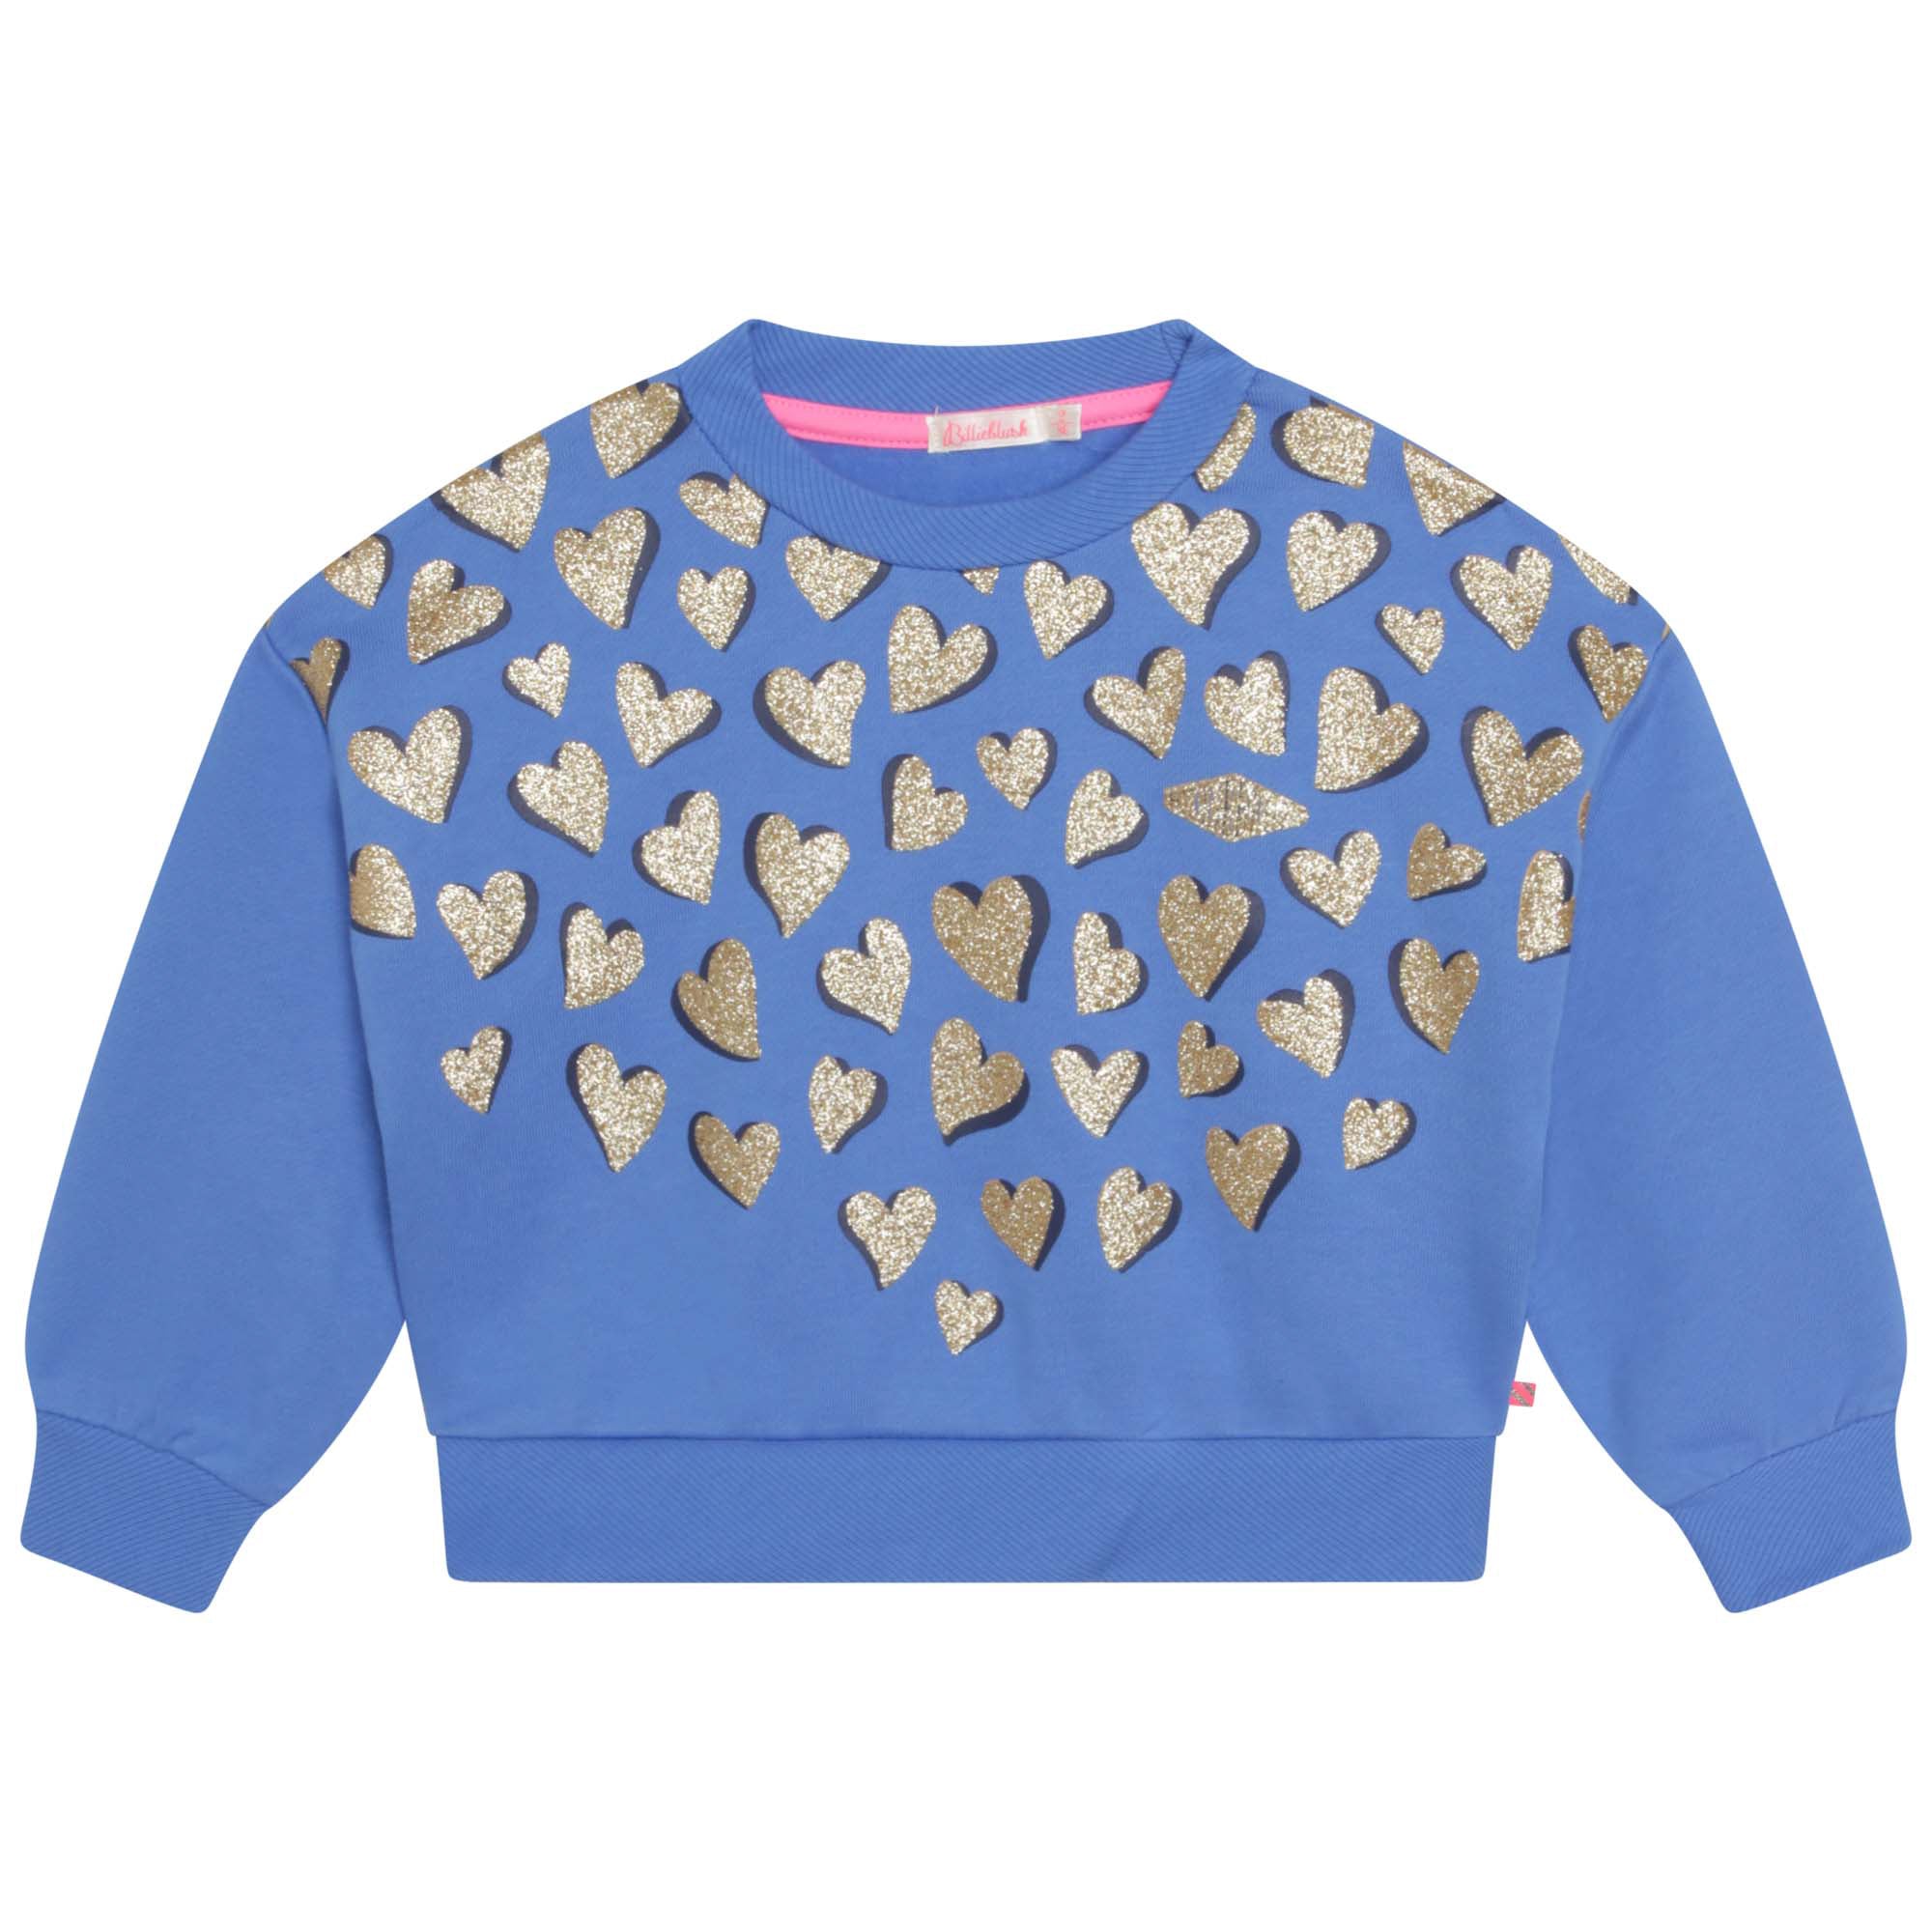 Billieblush_Billieblush Sweatshirt with Gold Hearts_Tops